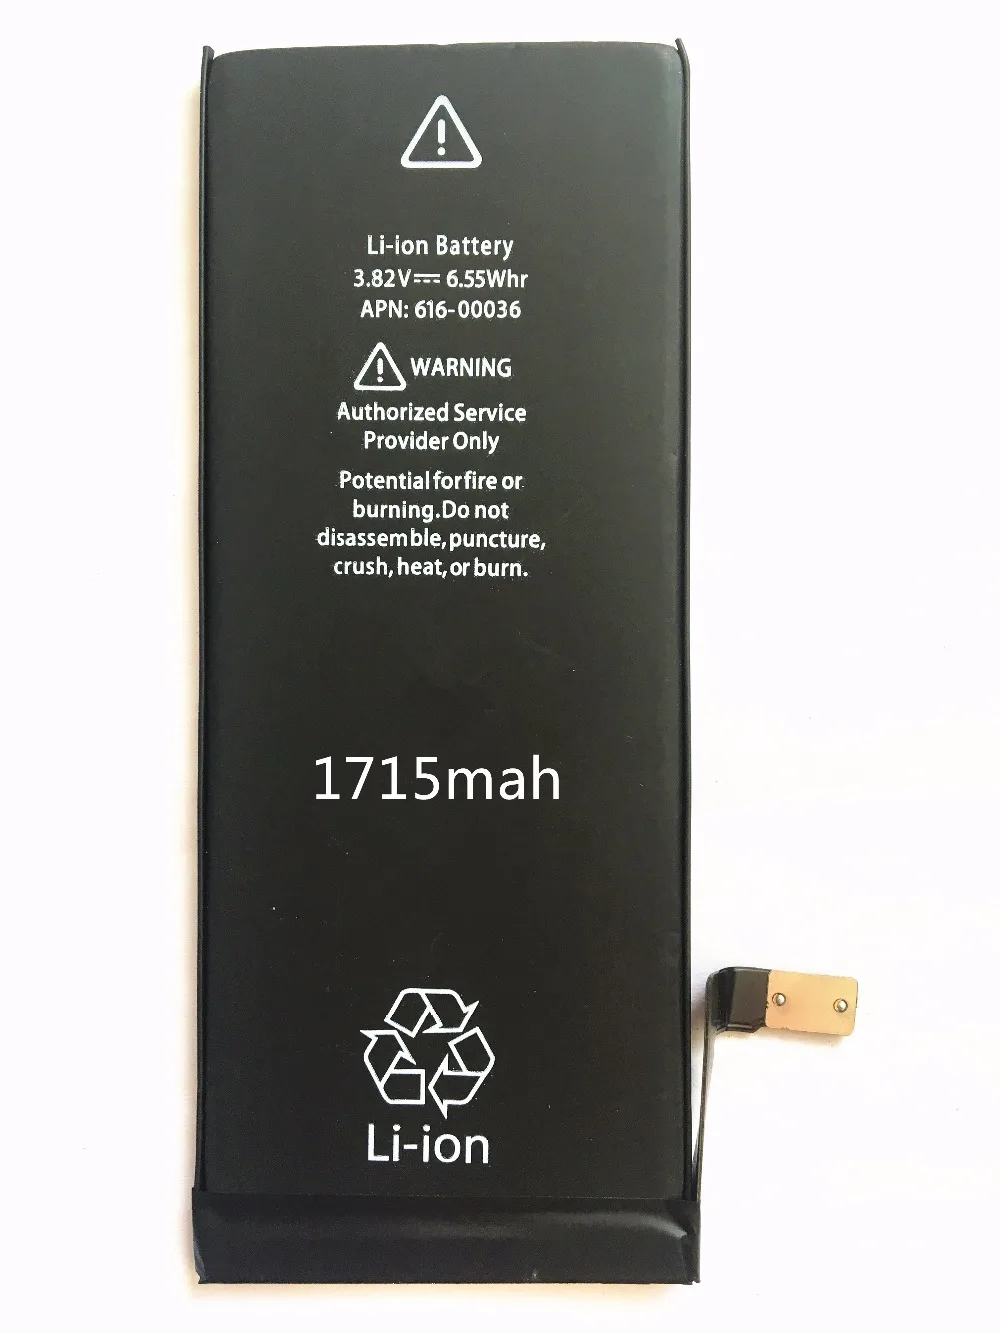 Новинка для iPhone 6S батарея внутренняя Замена батареи 3,82 V 1715mah батарея для iPhone 6S с ремонтным набором инструментов